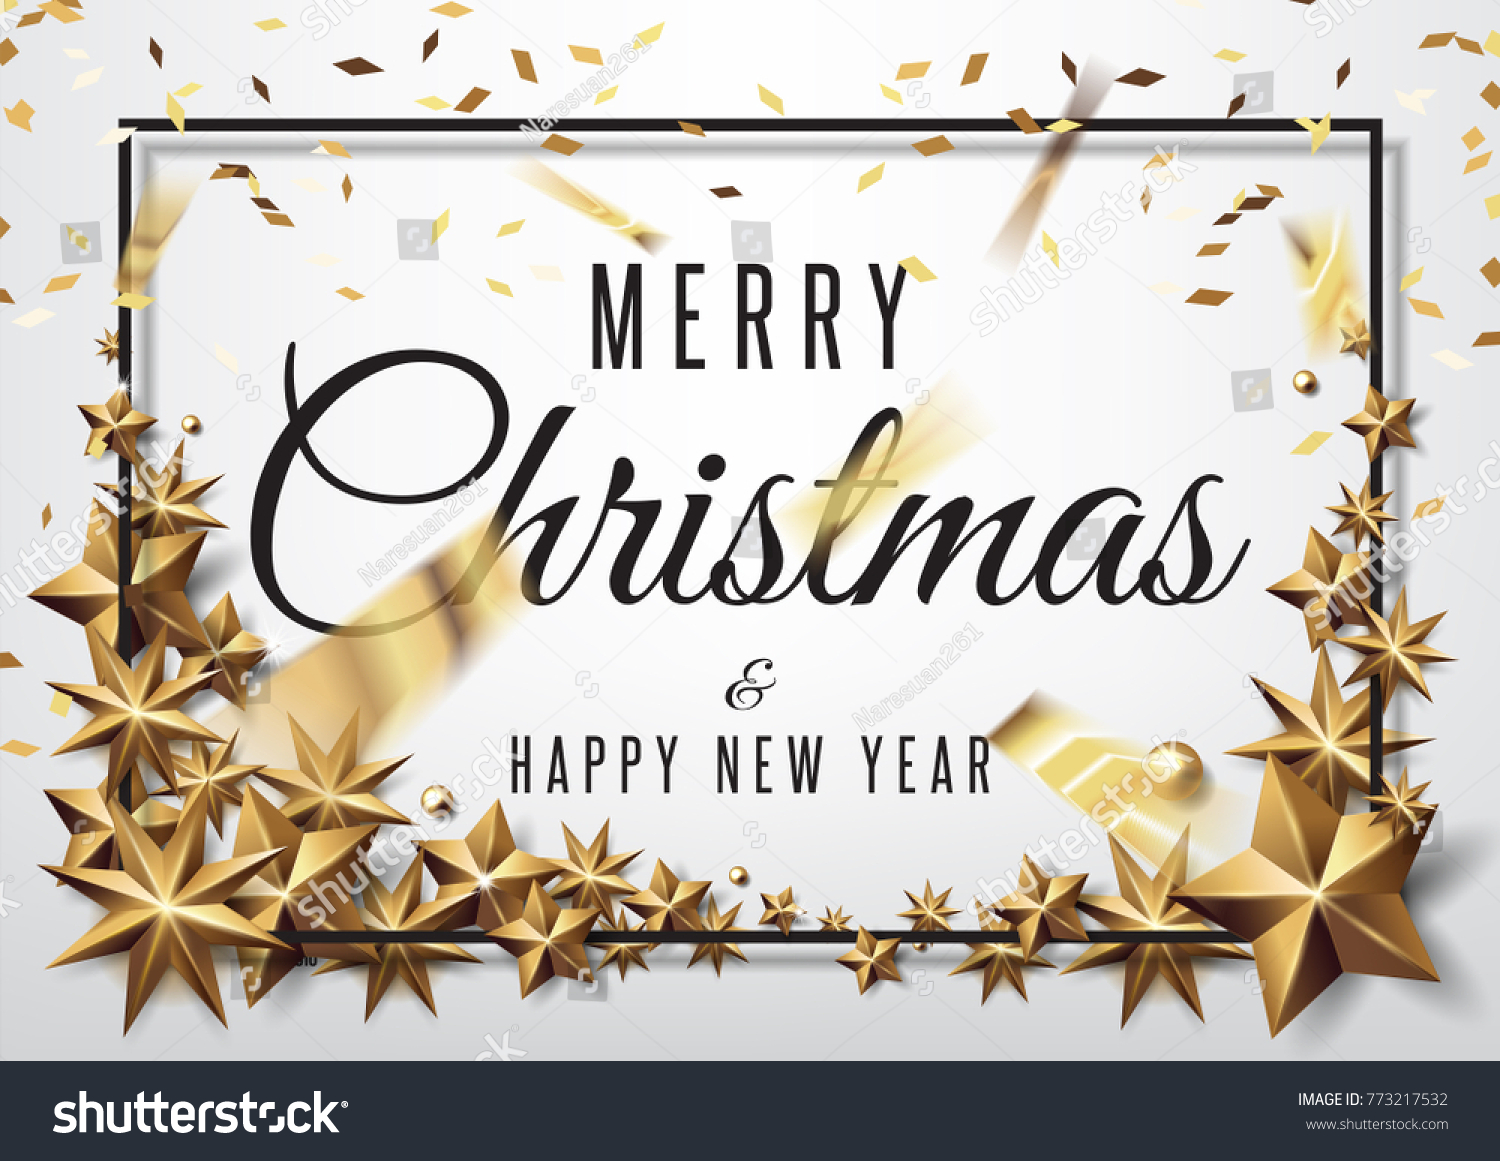 Merry Christmas Happy New Year 2018 Stock Vector 773217532 - Shutterstock